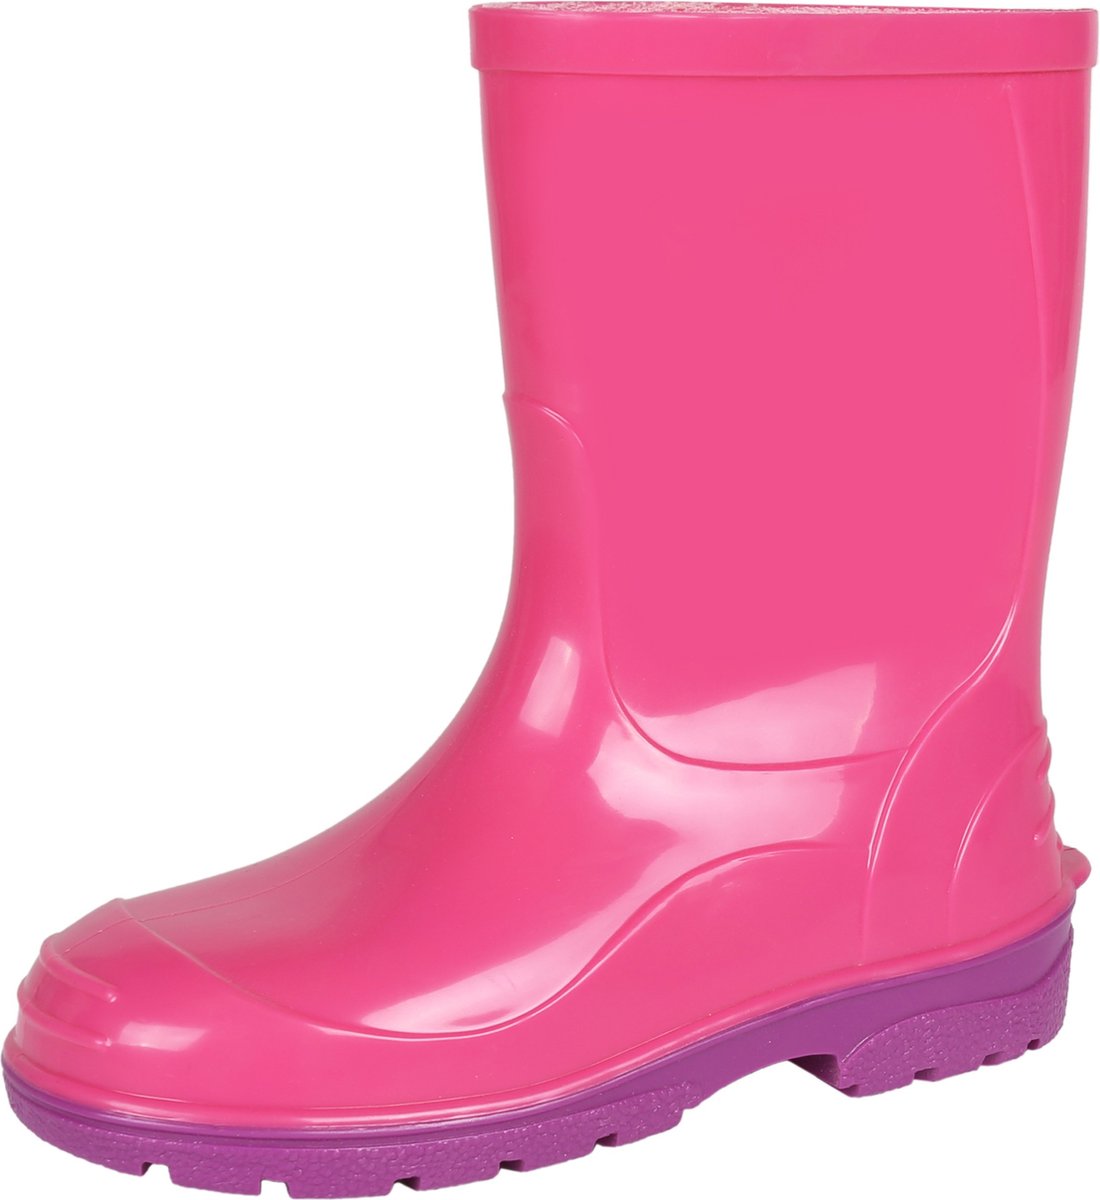 Roze laarzen met paarse zool - Ola LEMIGO / 22